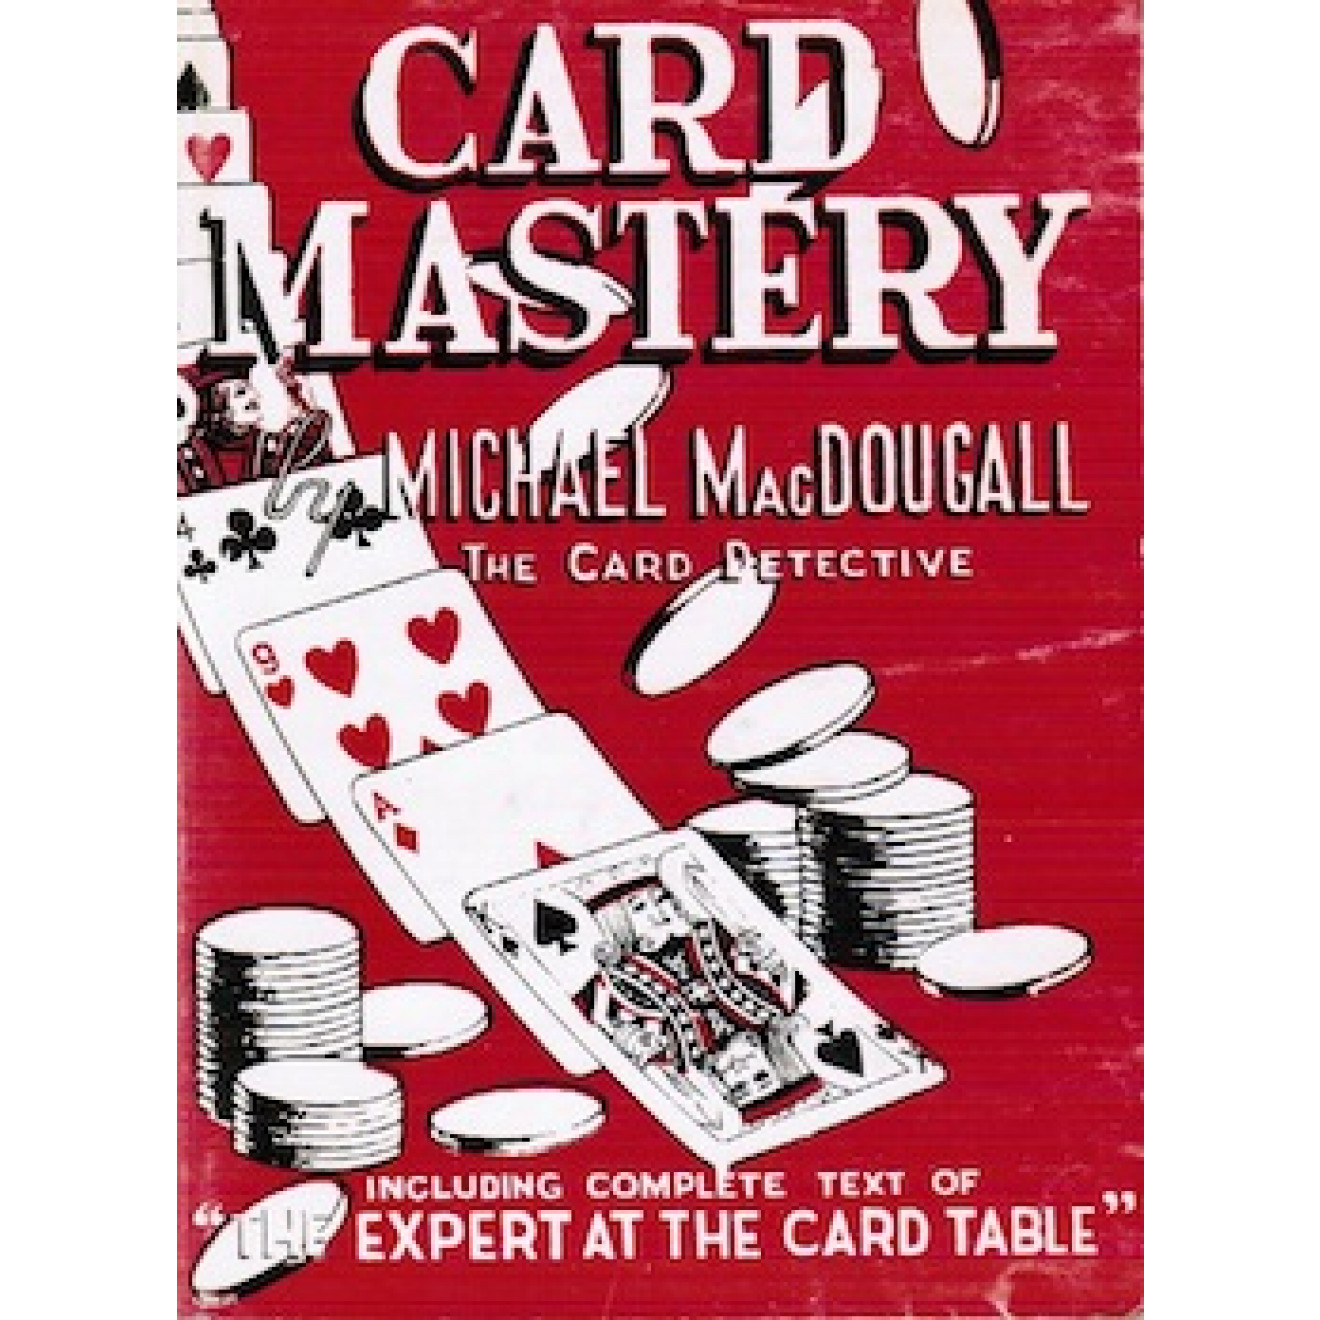 Card Mastery